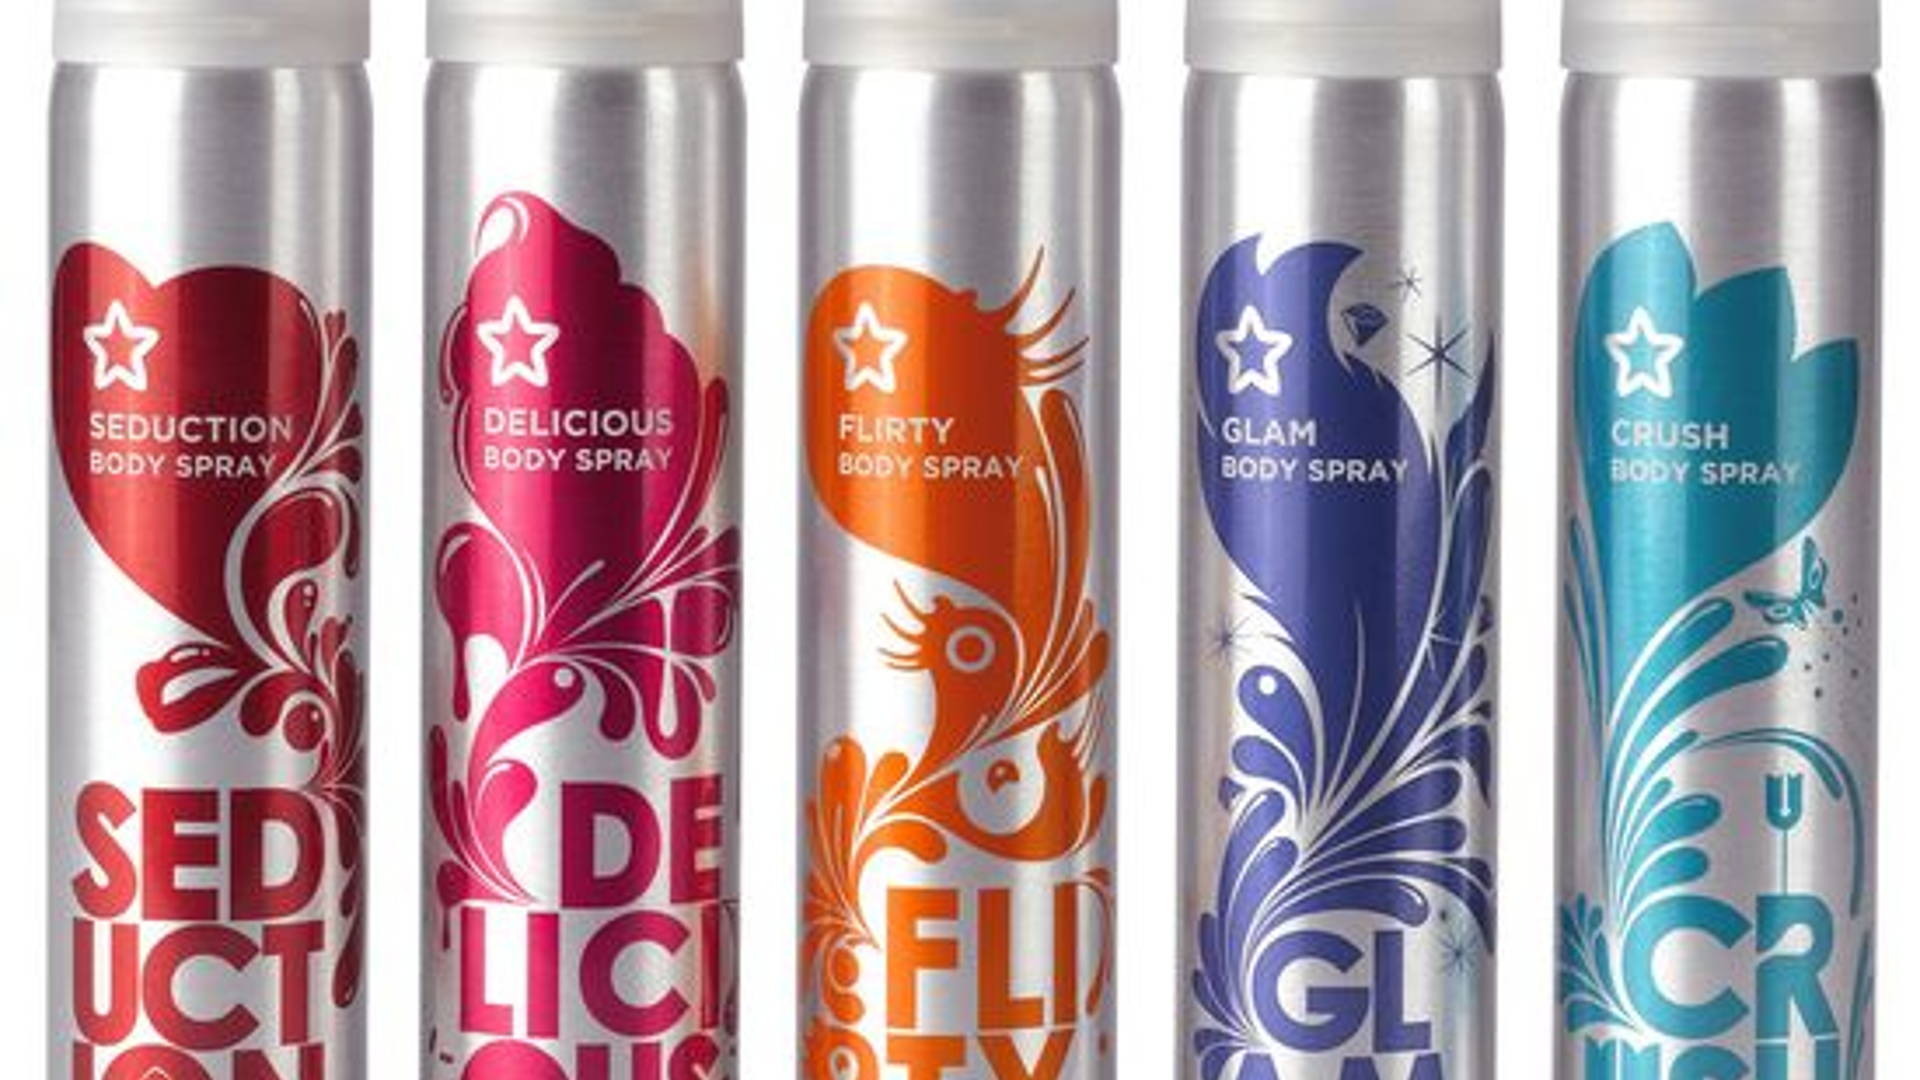 Superdrug Body Sprays | Dieline - Design, Branding & Packaging Inspiration